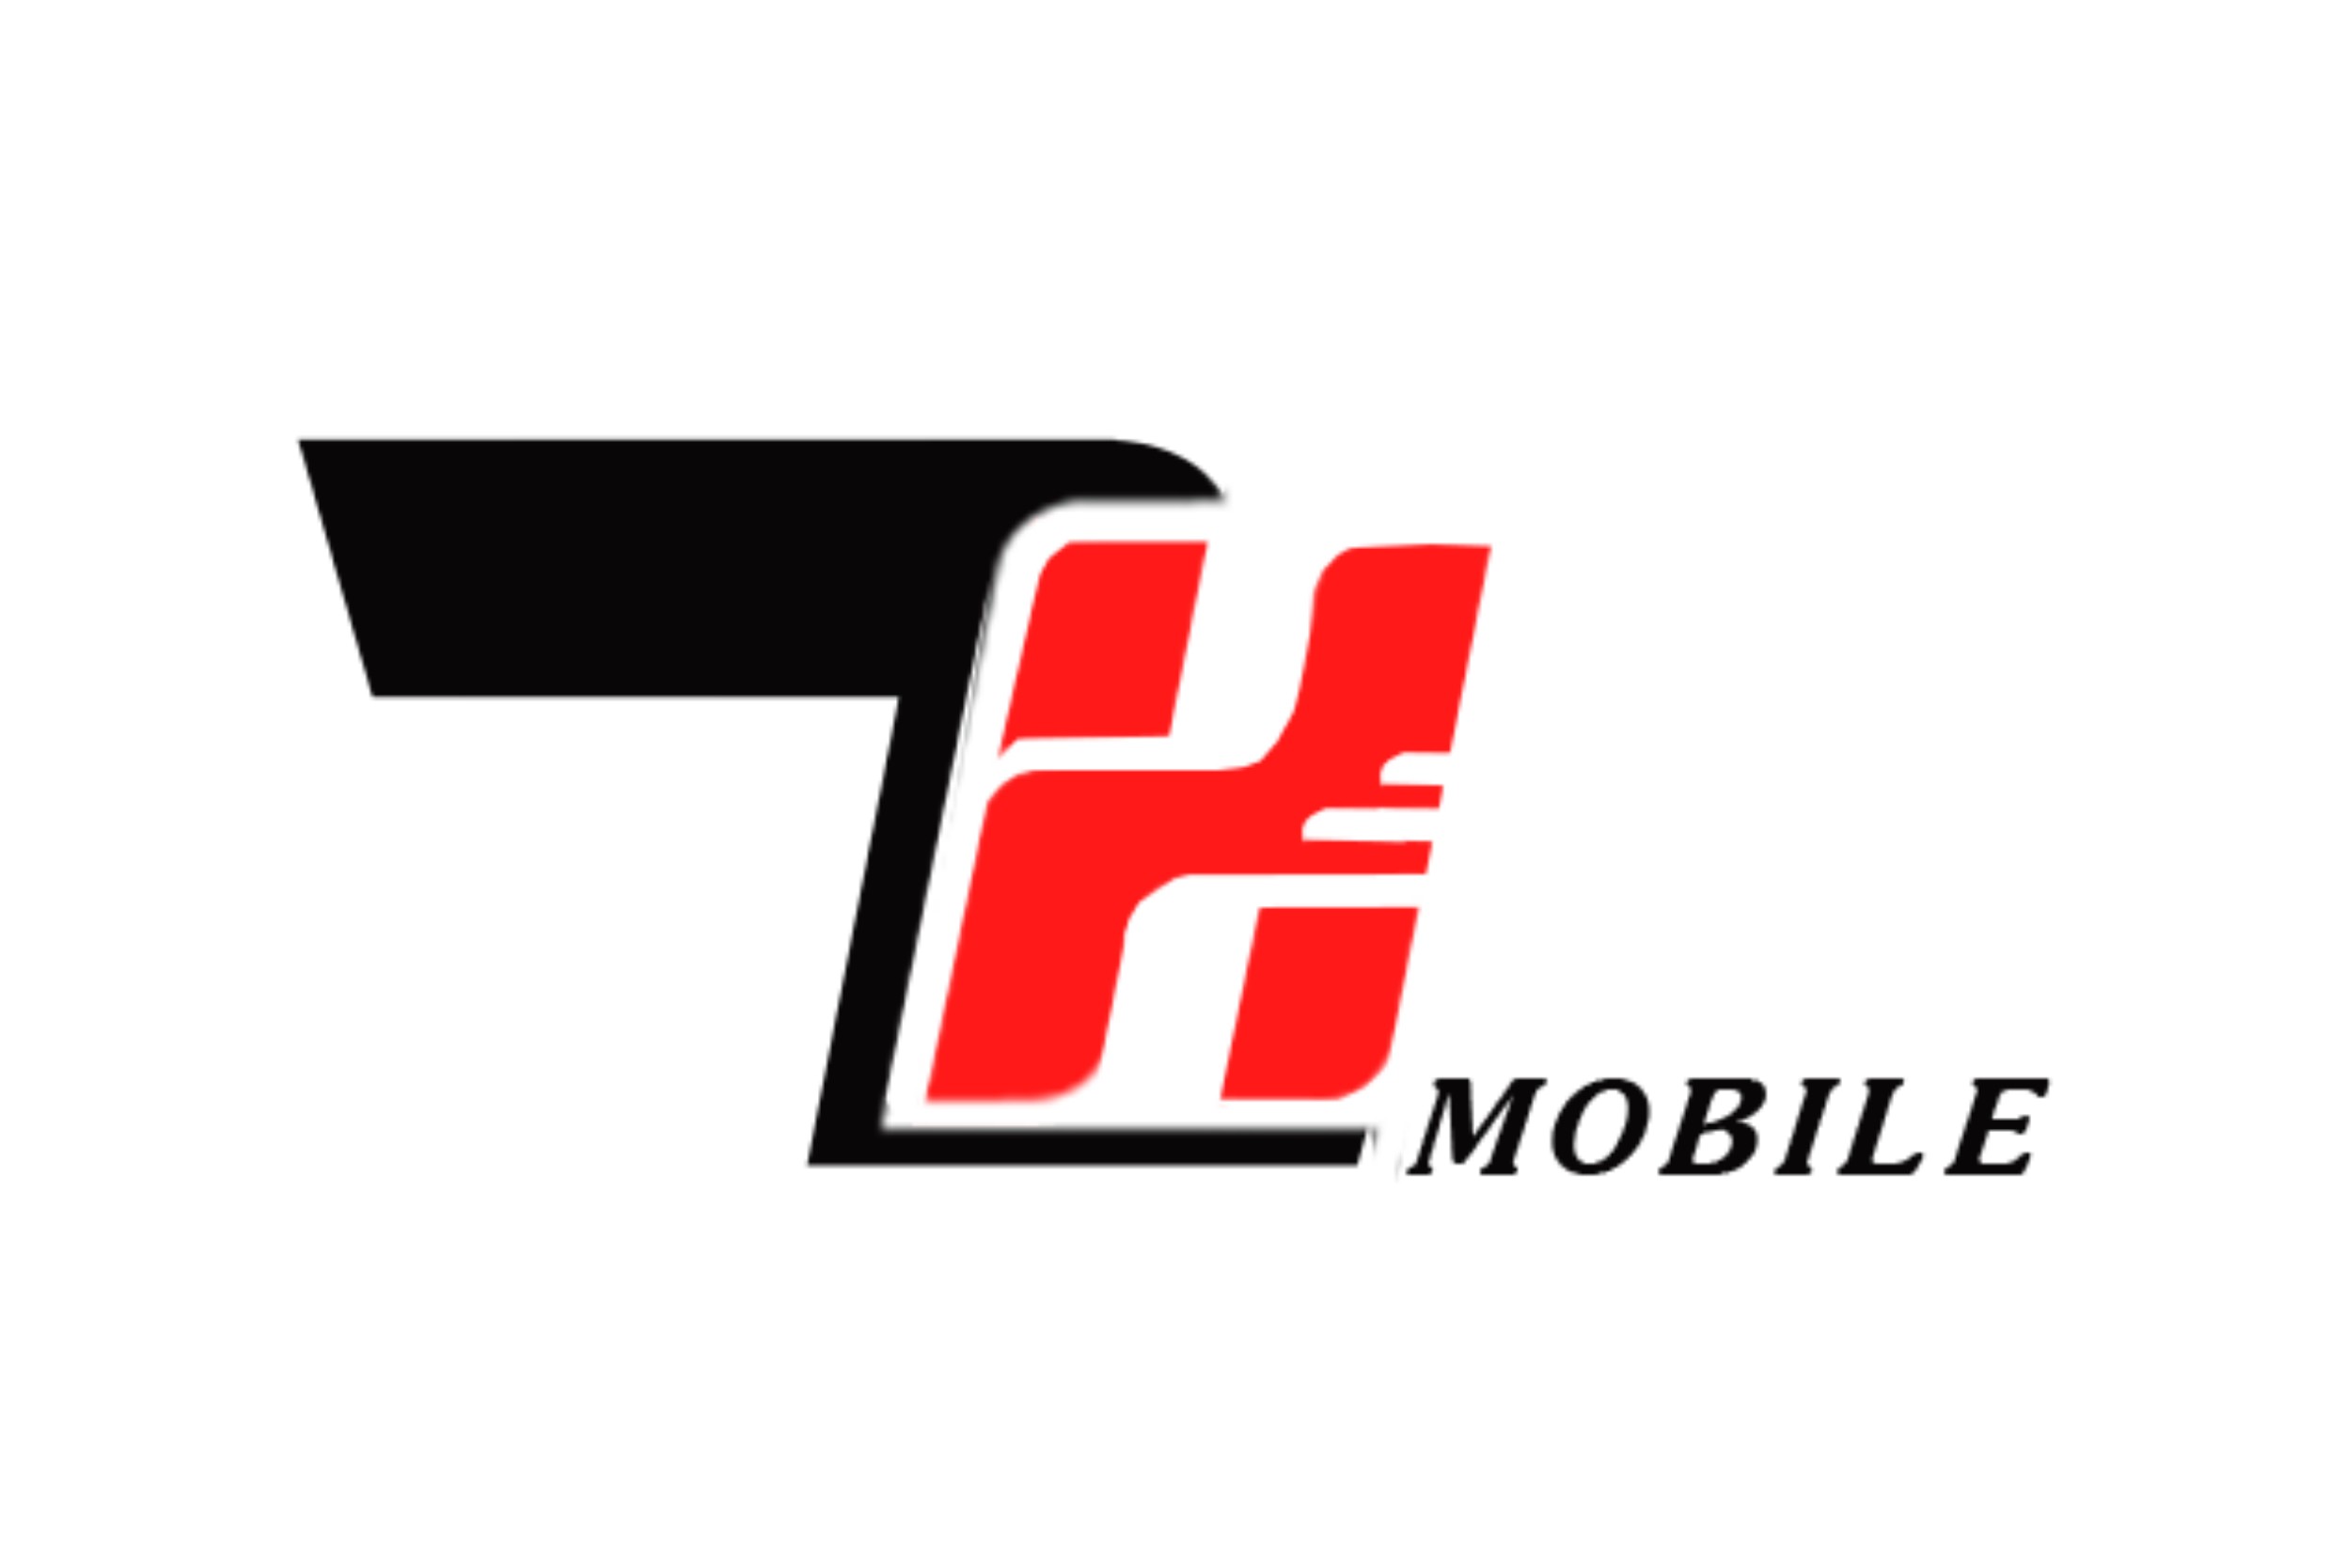 th-mobile-logo